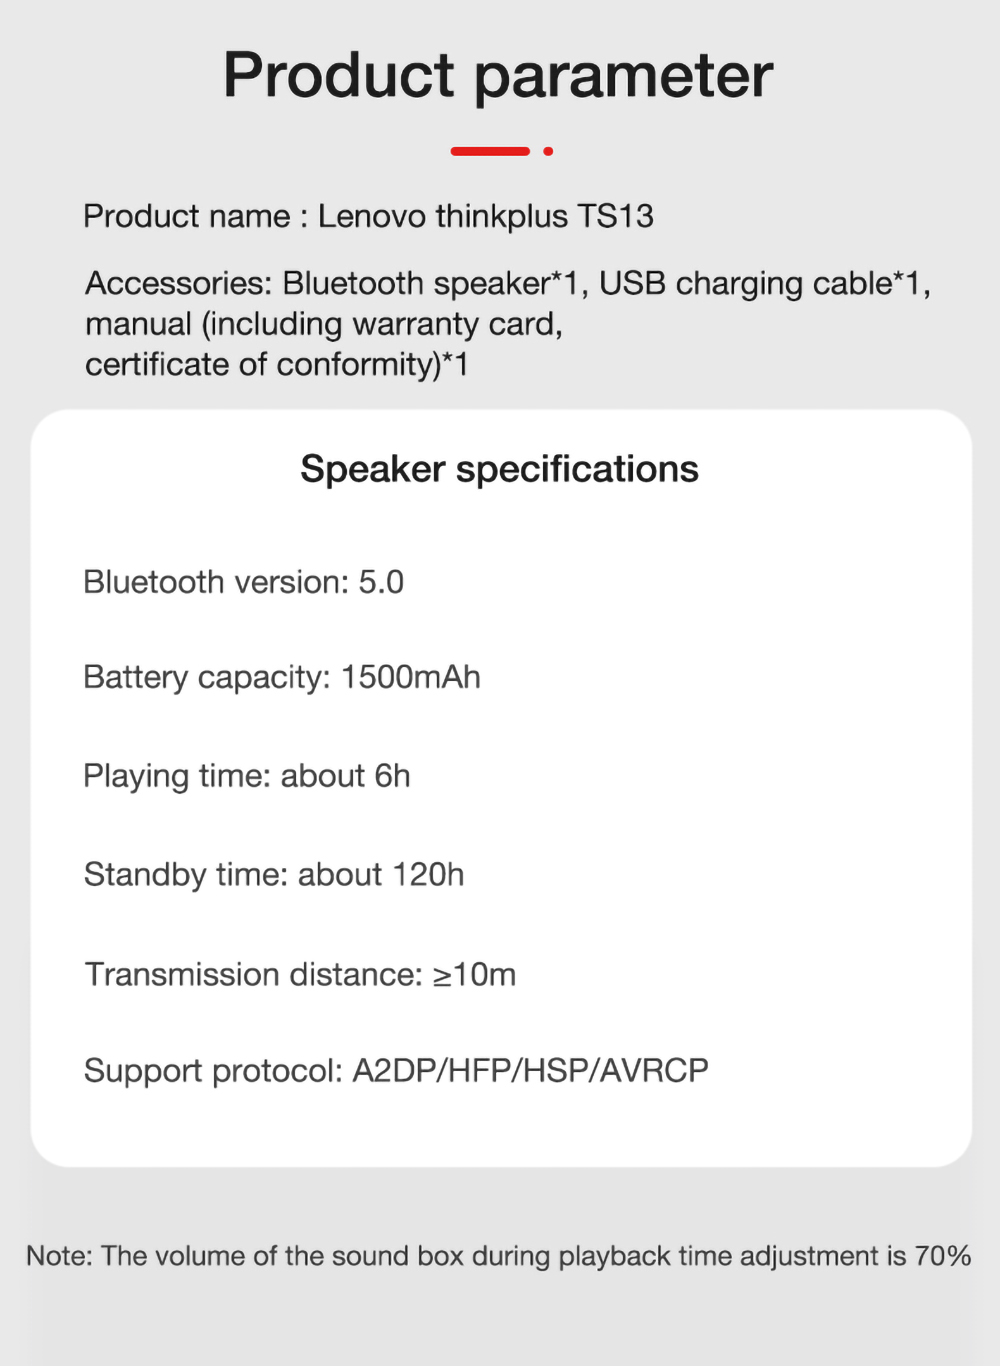 Lenovo-thinkplus-TS13-Speaker-Alarm-Clock-Mirror-Wireless-Bluetooth-Speaker-LED-Digital-Stereo-Deskt-1965747-14